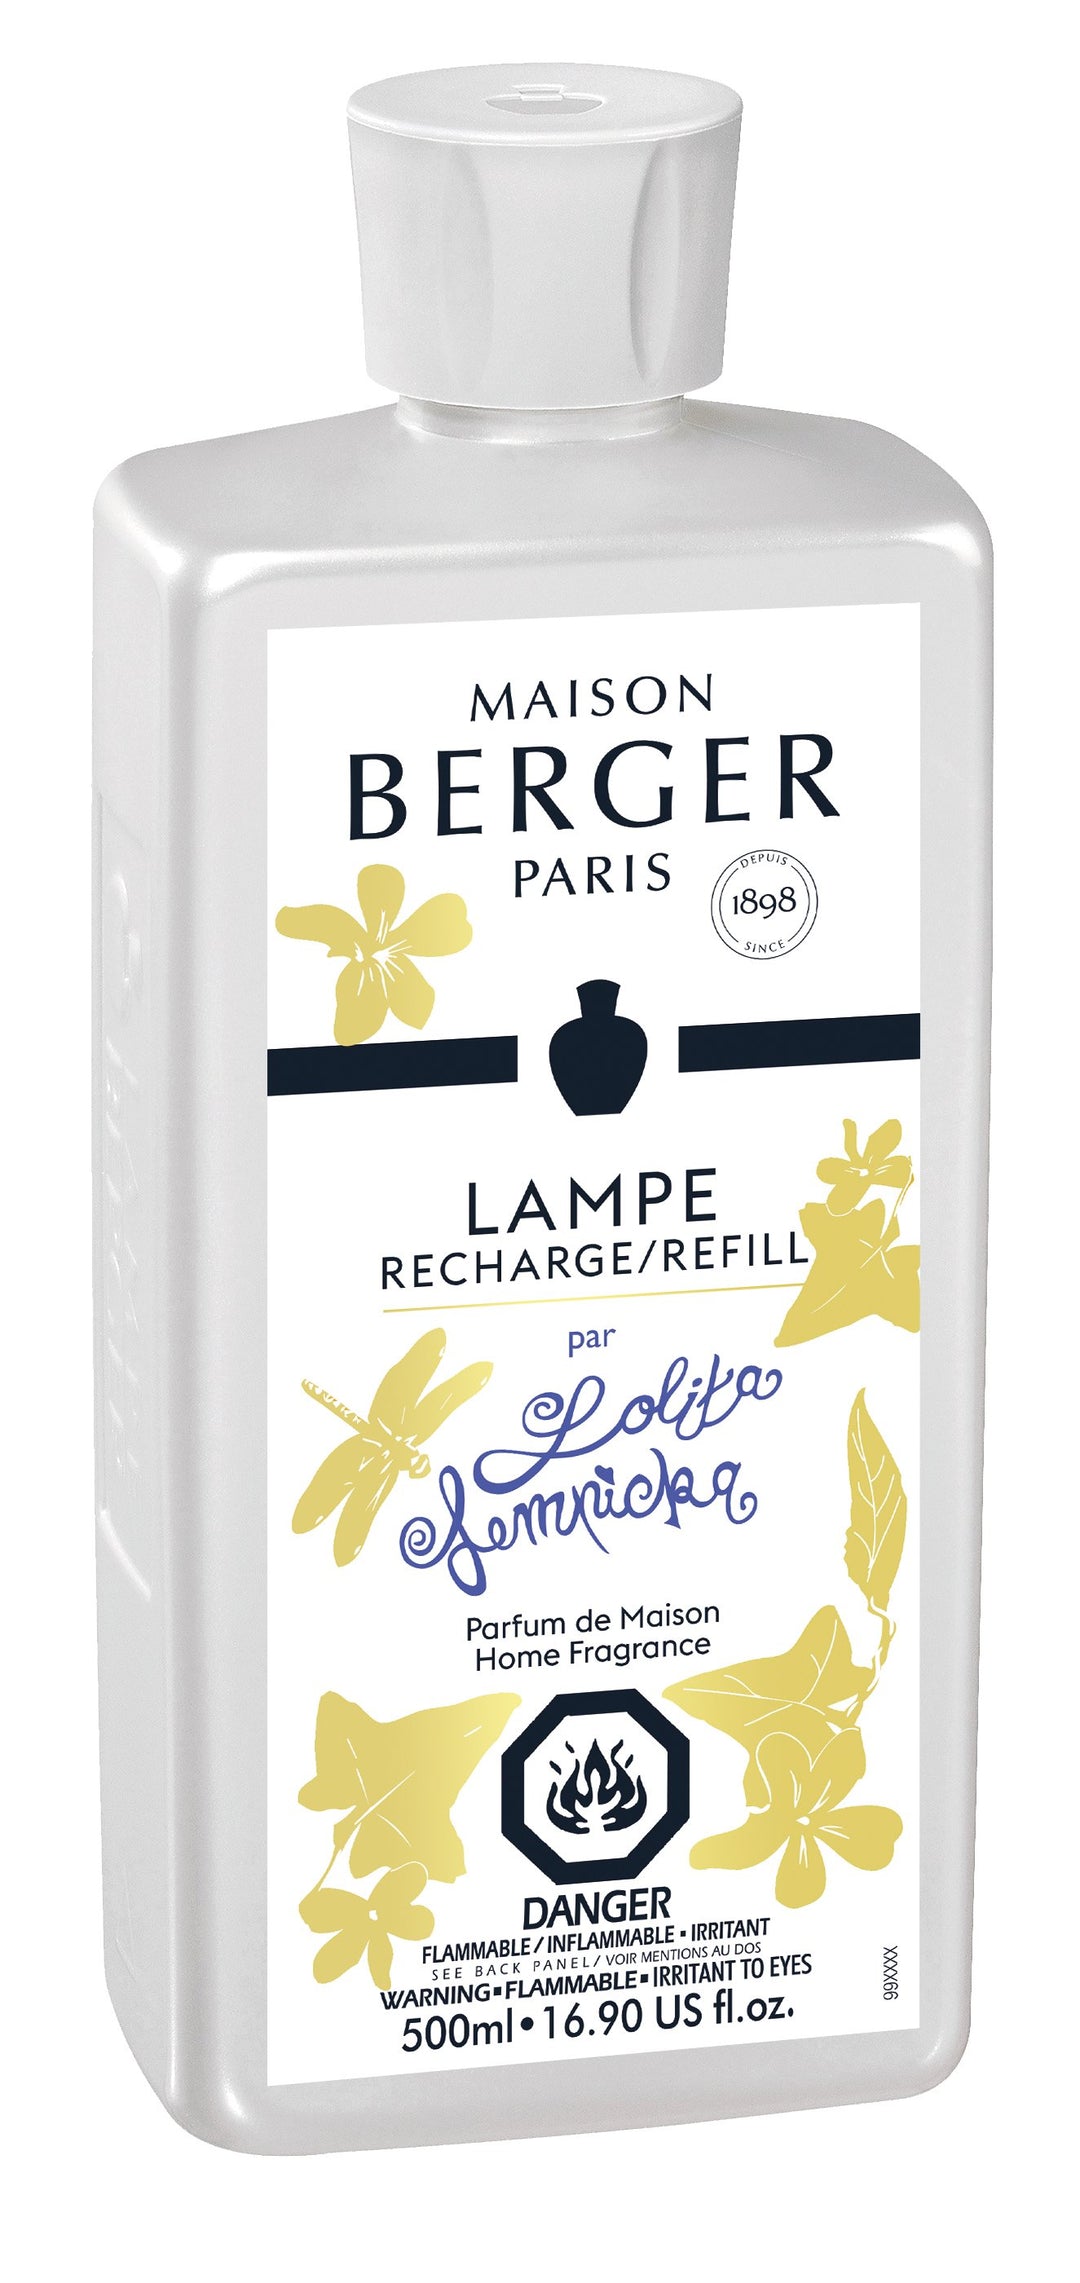 Maison Berger - Lolita Lempicka electric diffuser refill by Maison